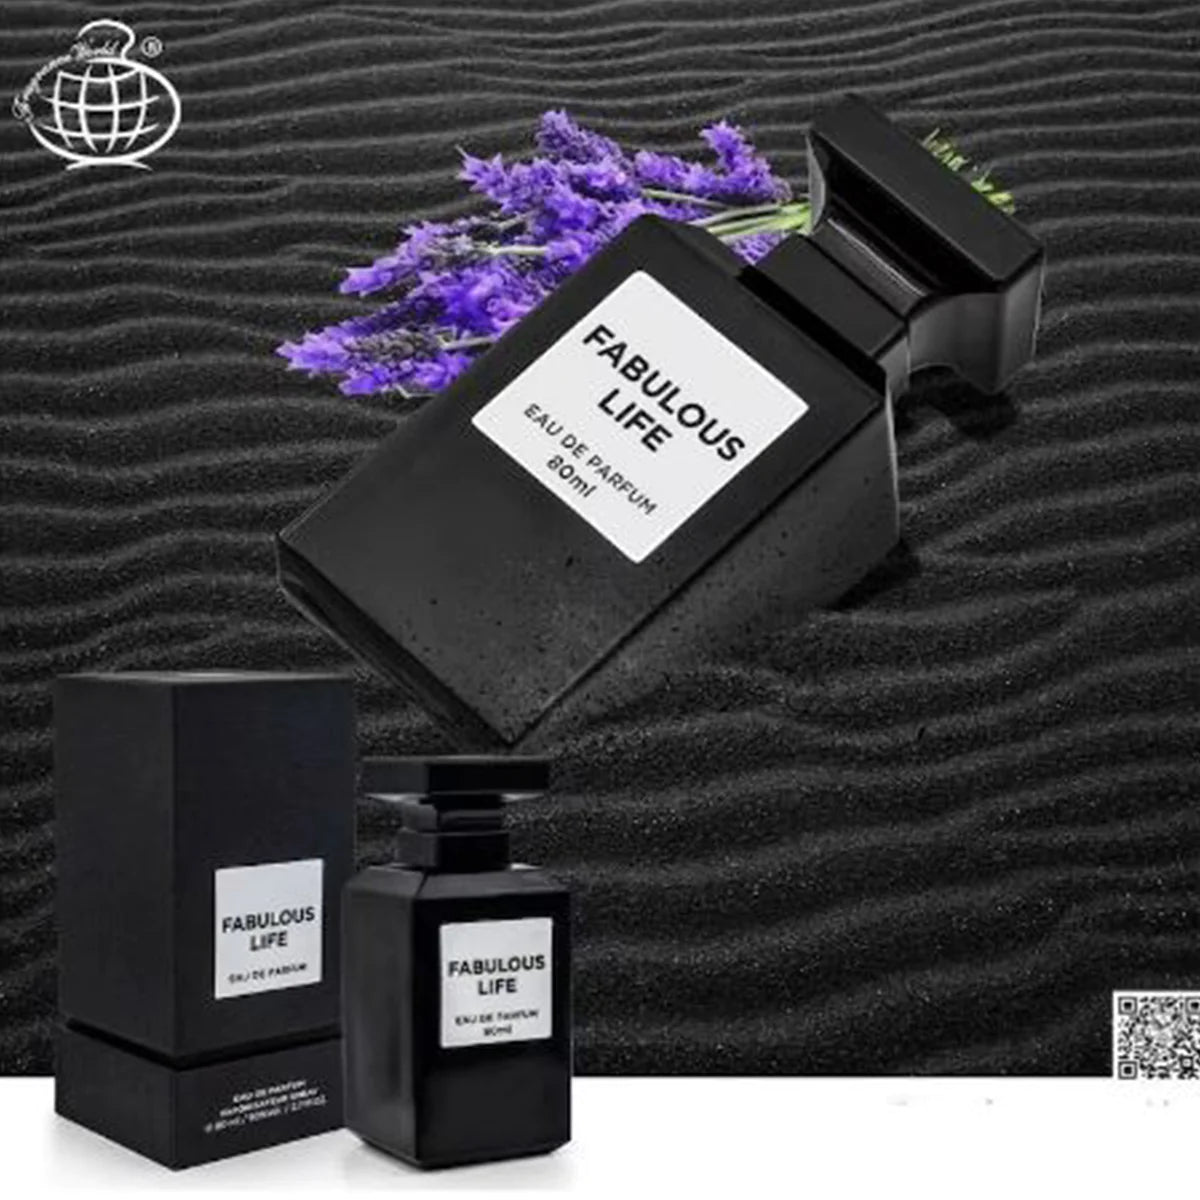 Fabulous Life by Fragrance World 80ml Perfume for Men